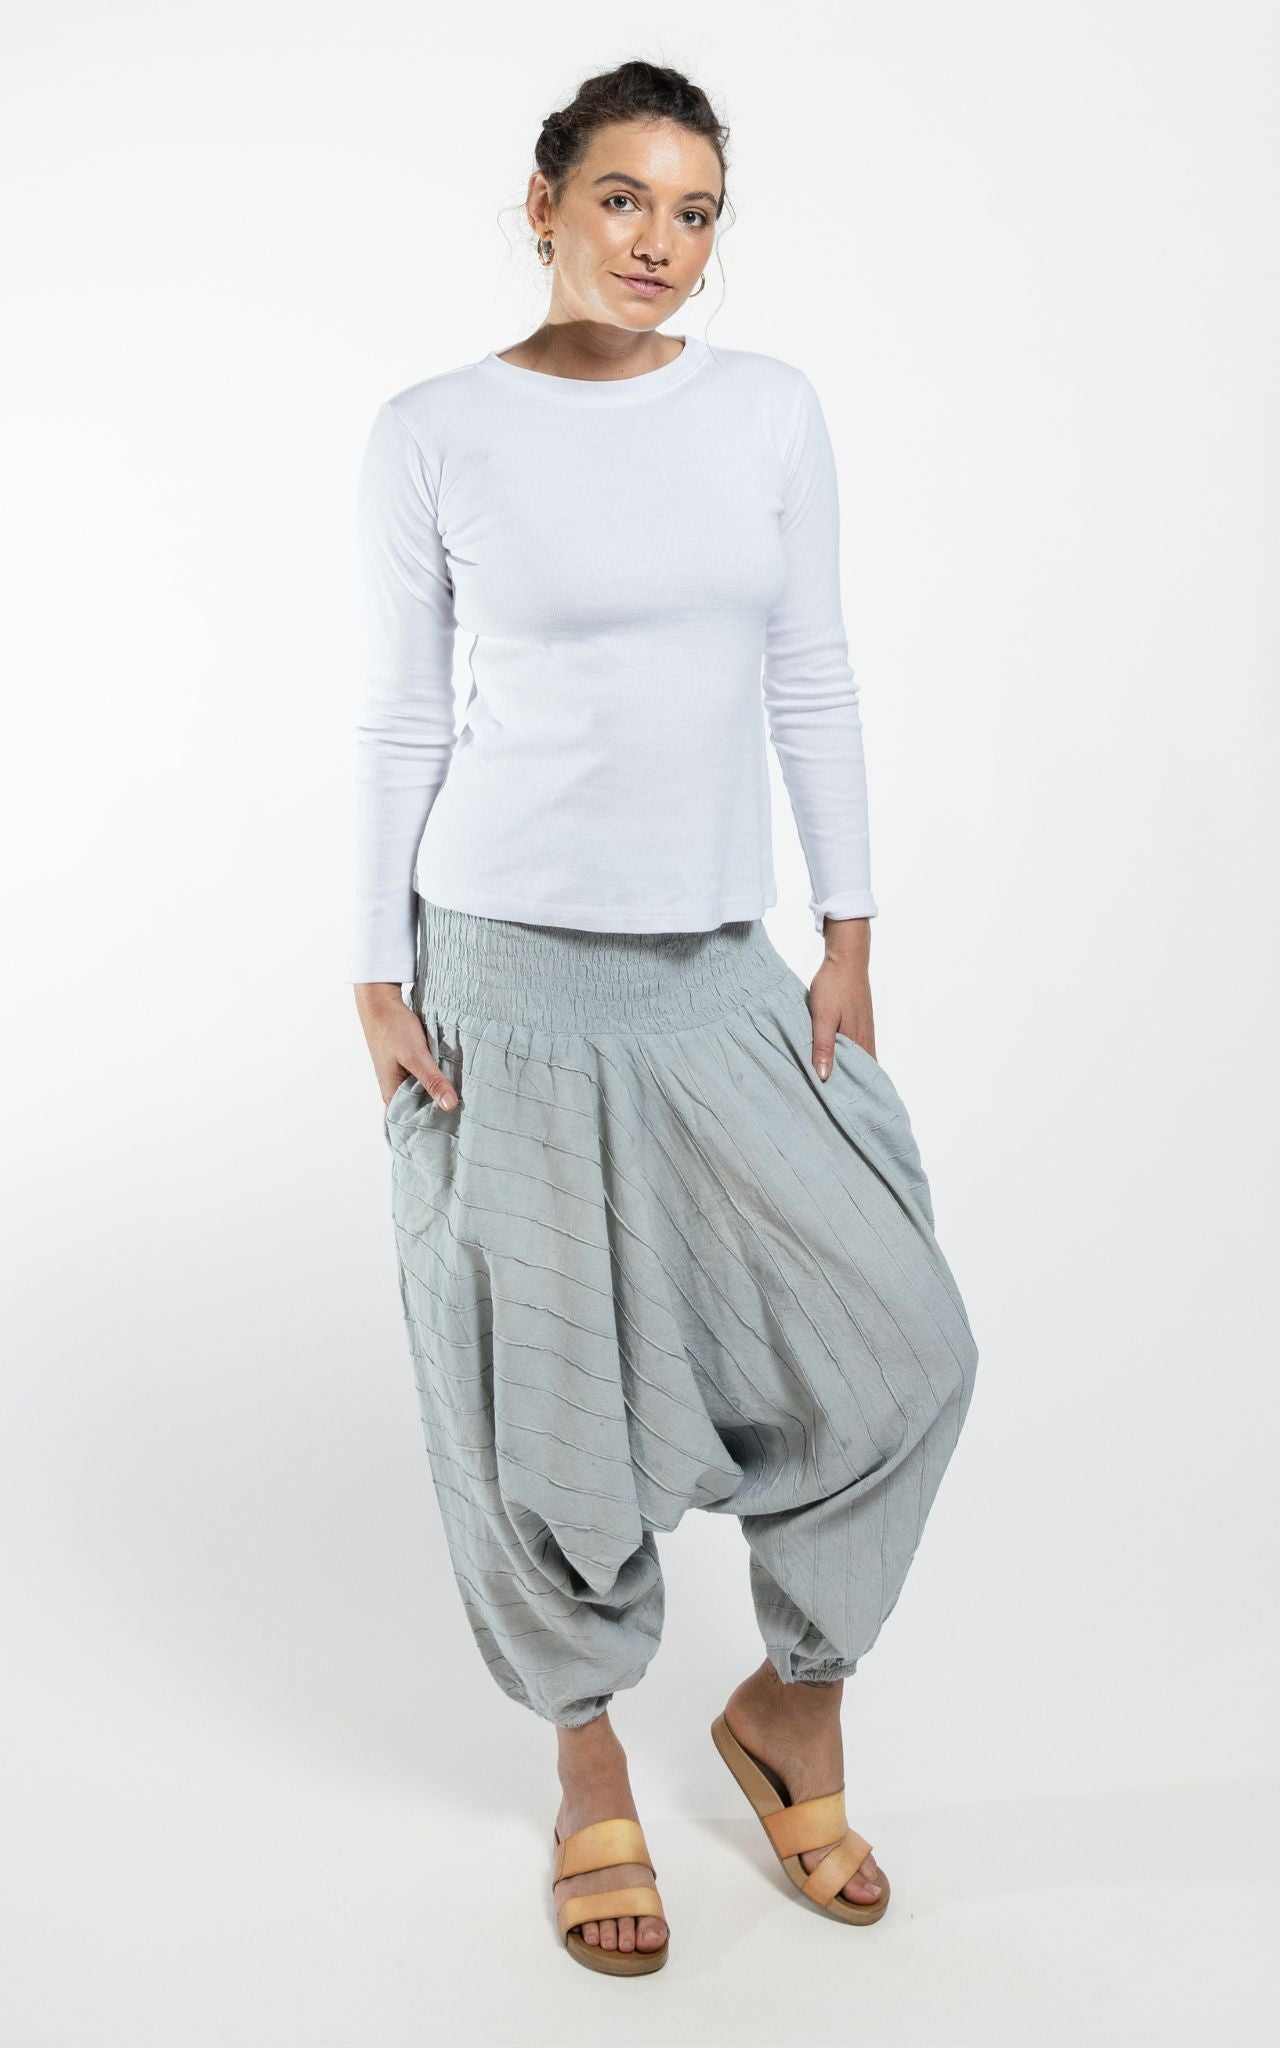 Surya Australia Cotton Low Crotch Pants made in Nepal - Grey